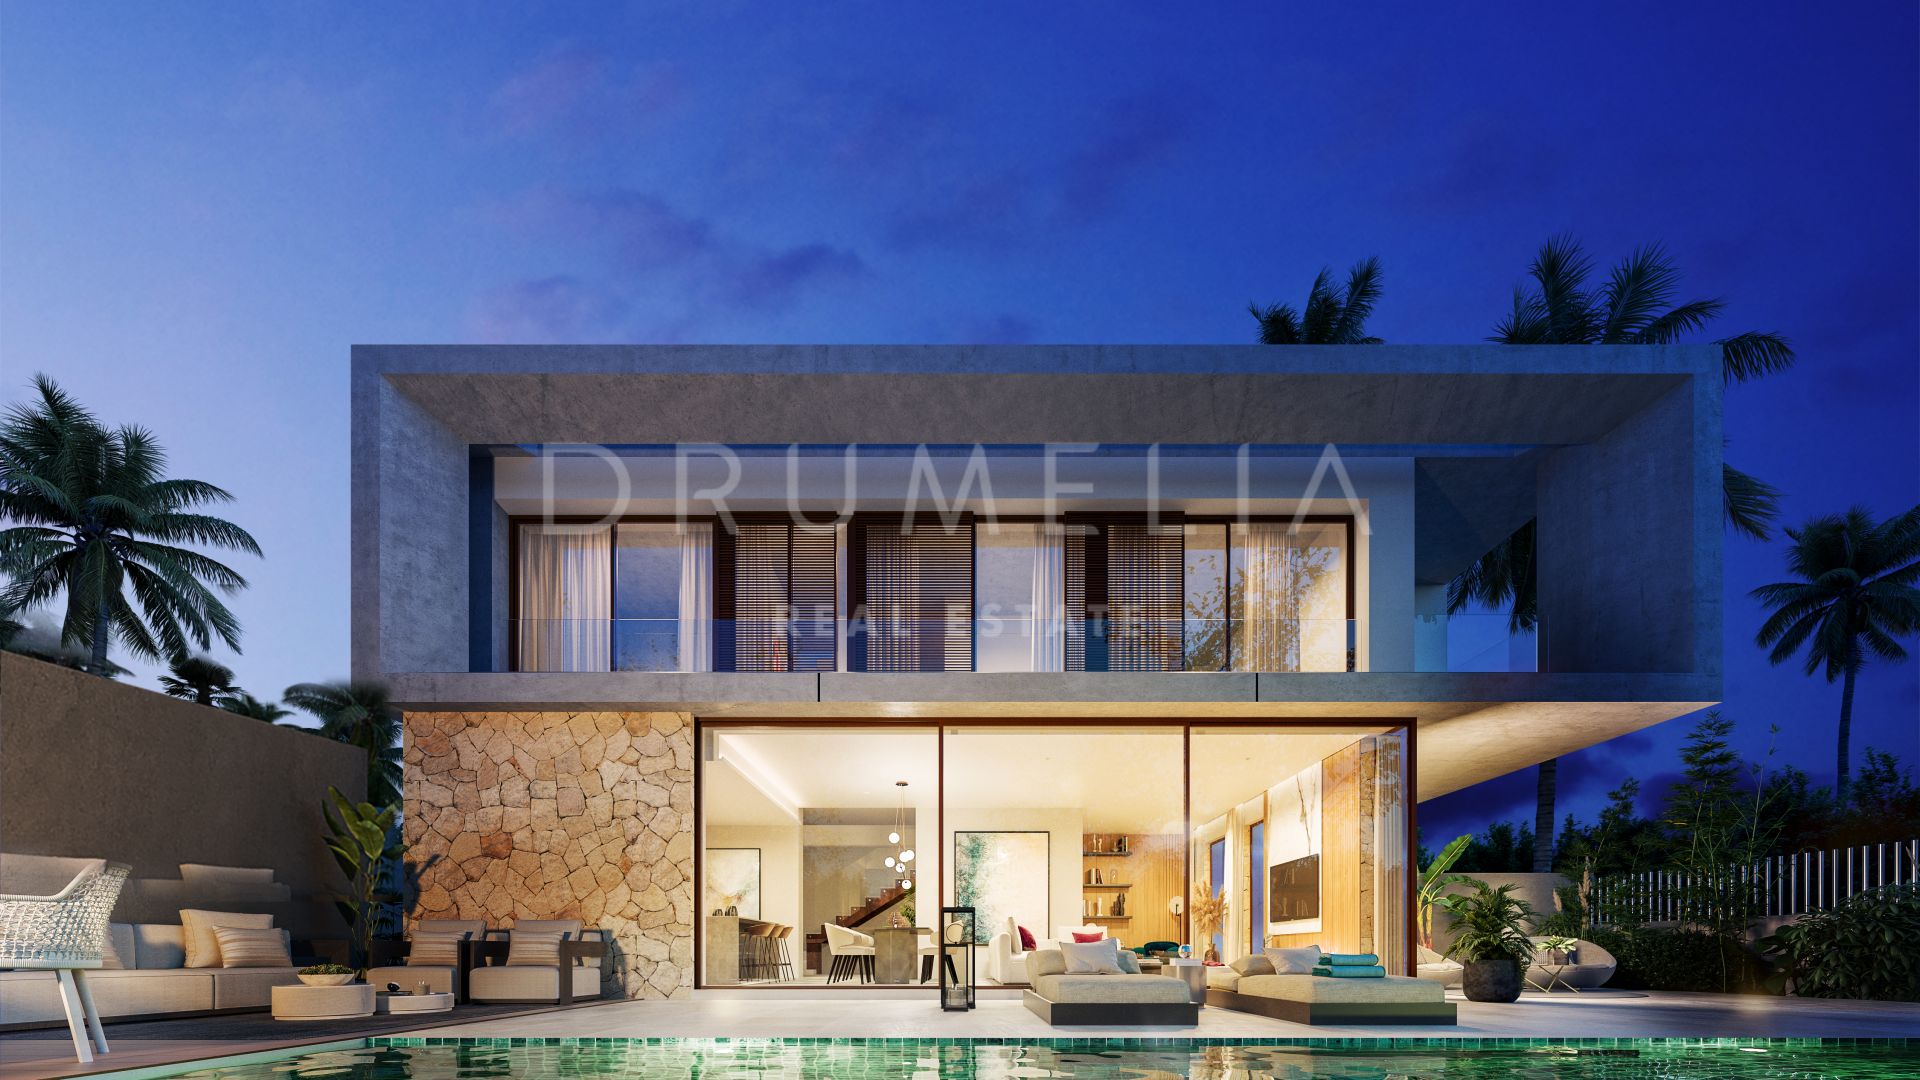 Beautiful contemporary style high-end villa project with sea views in prestigious beachside Casablanca, Marbella Golden Mile